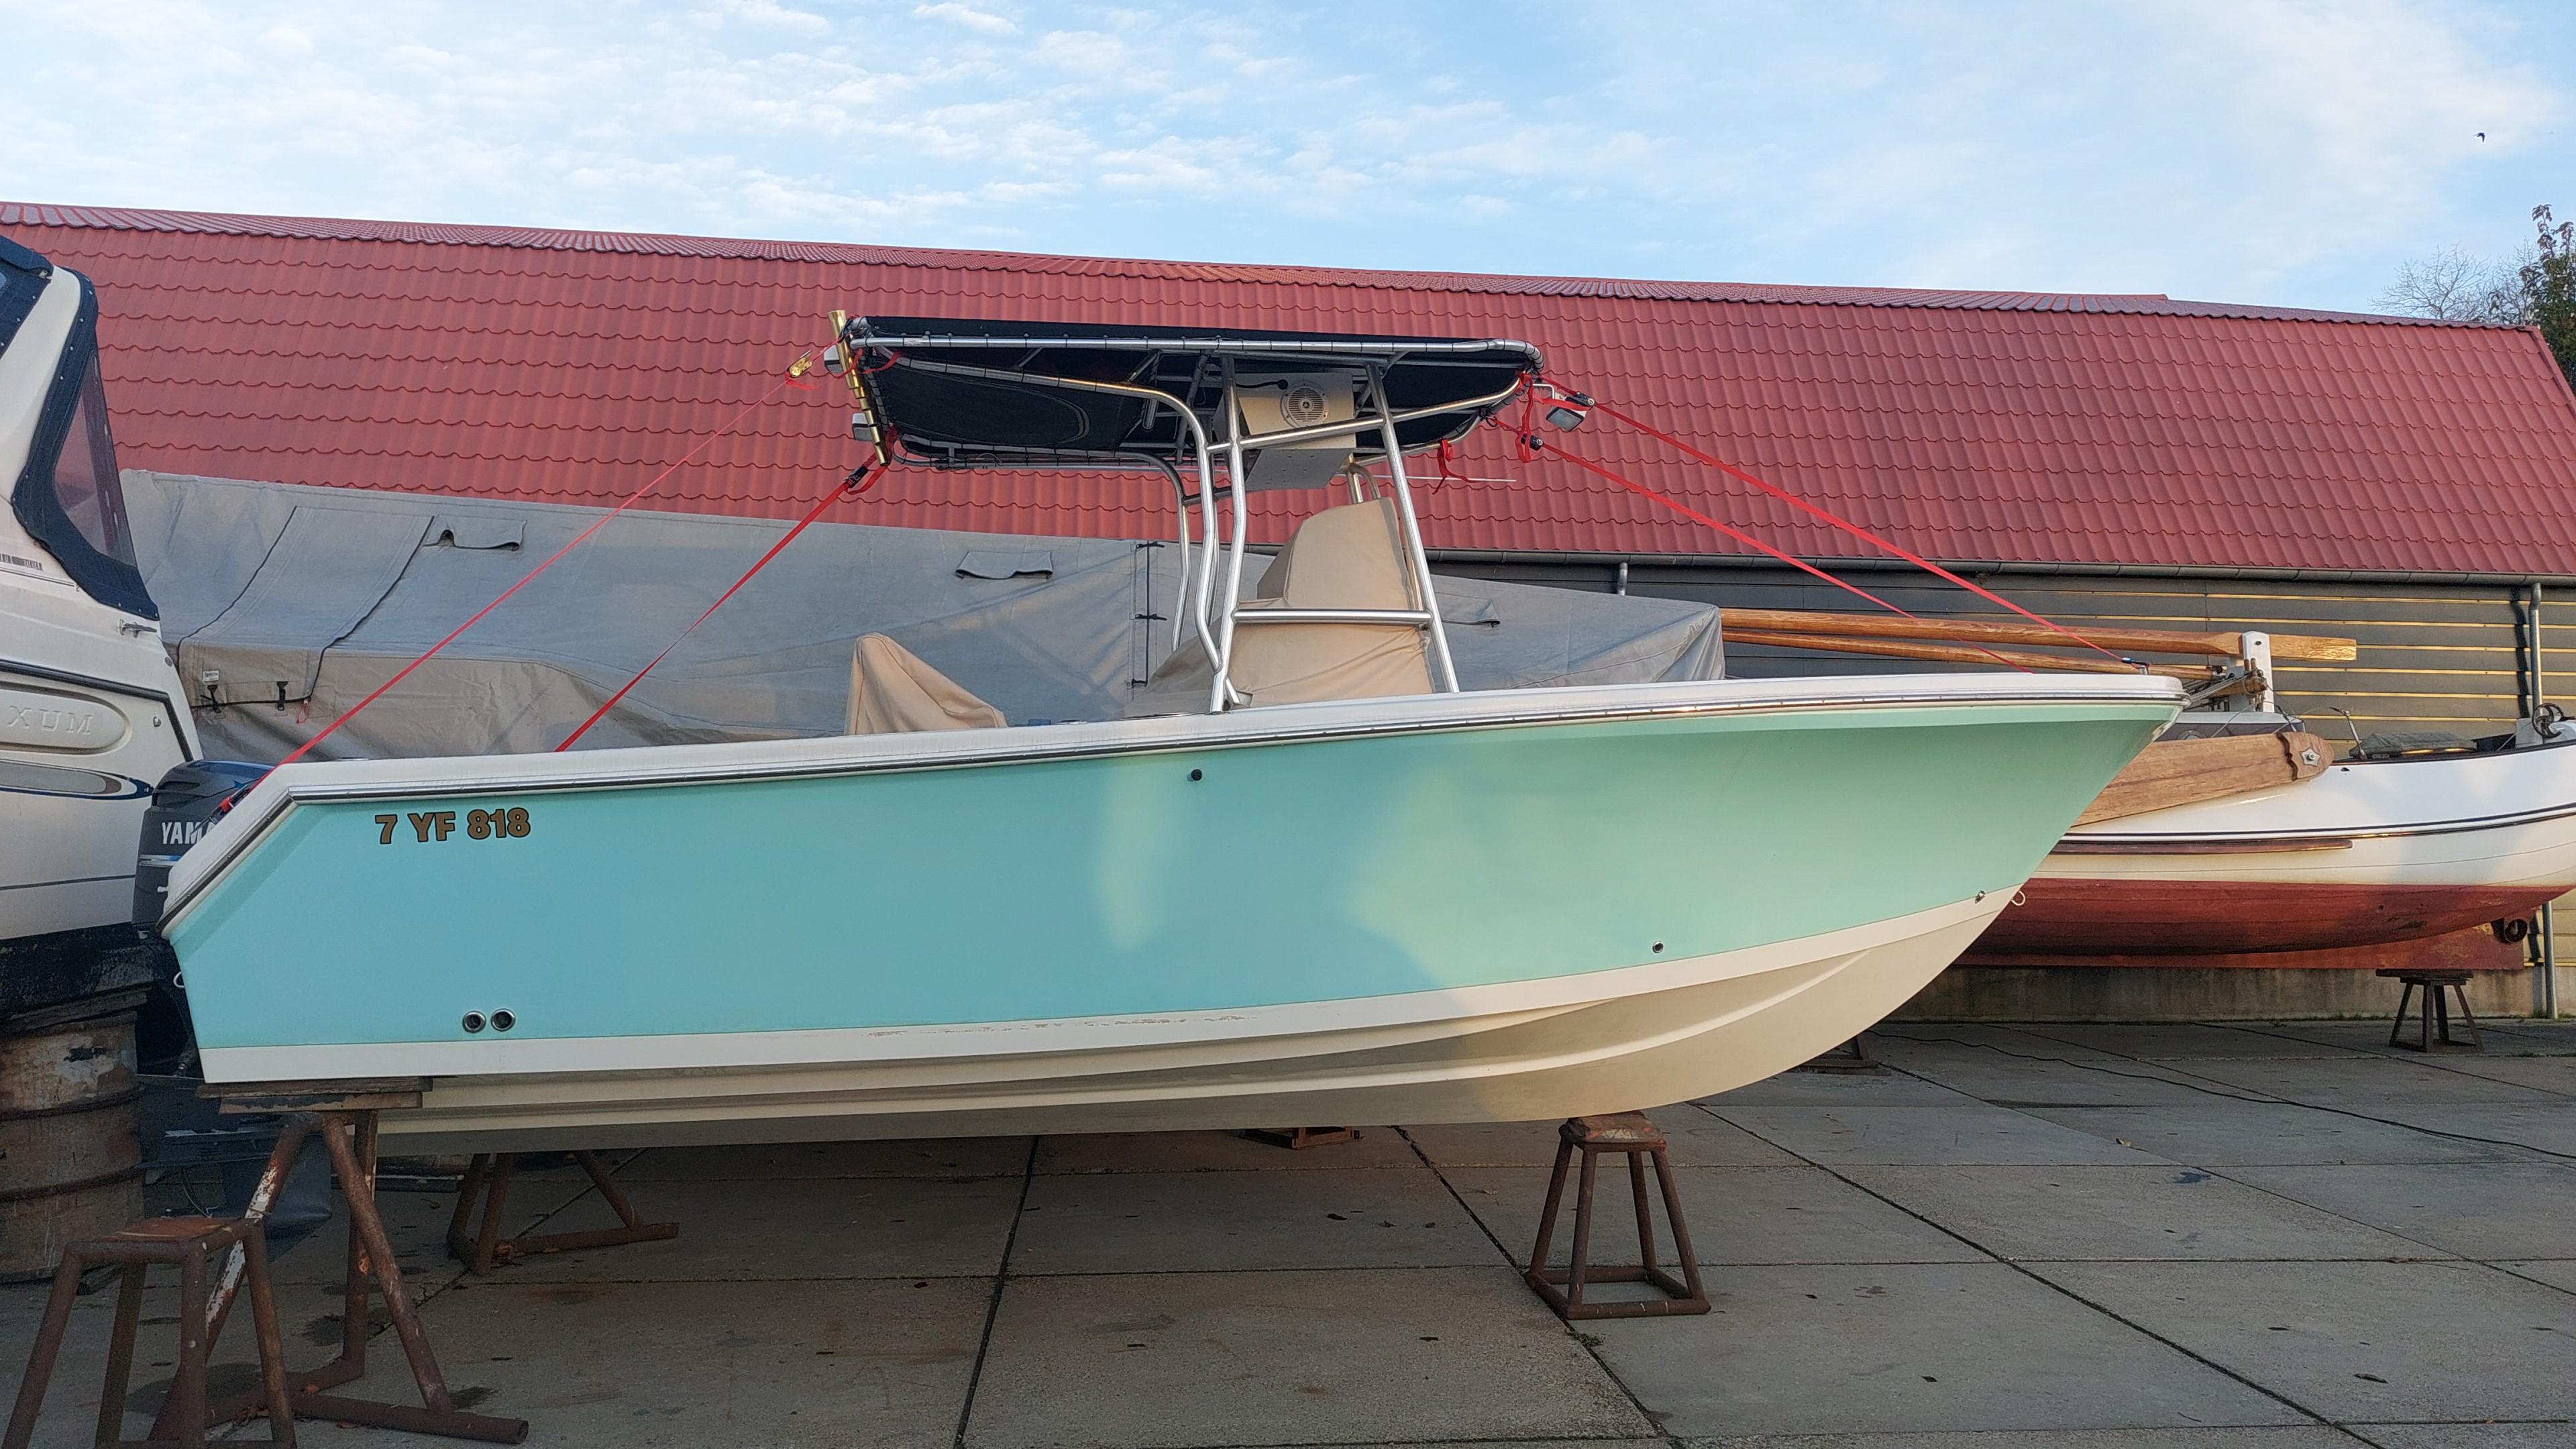 Sailfish boats for sale